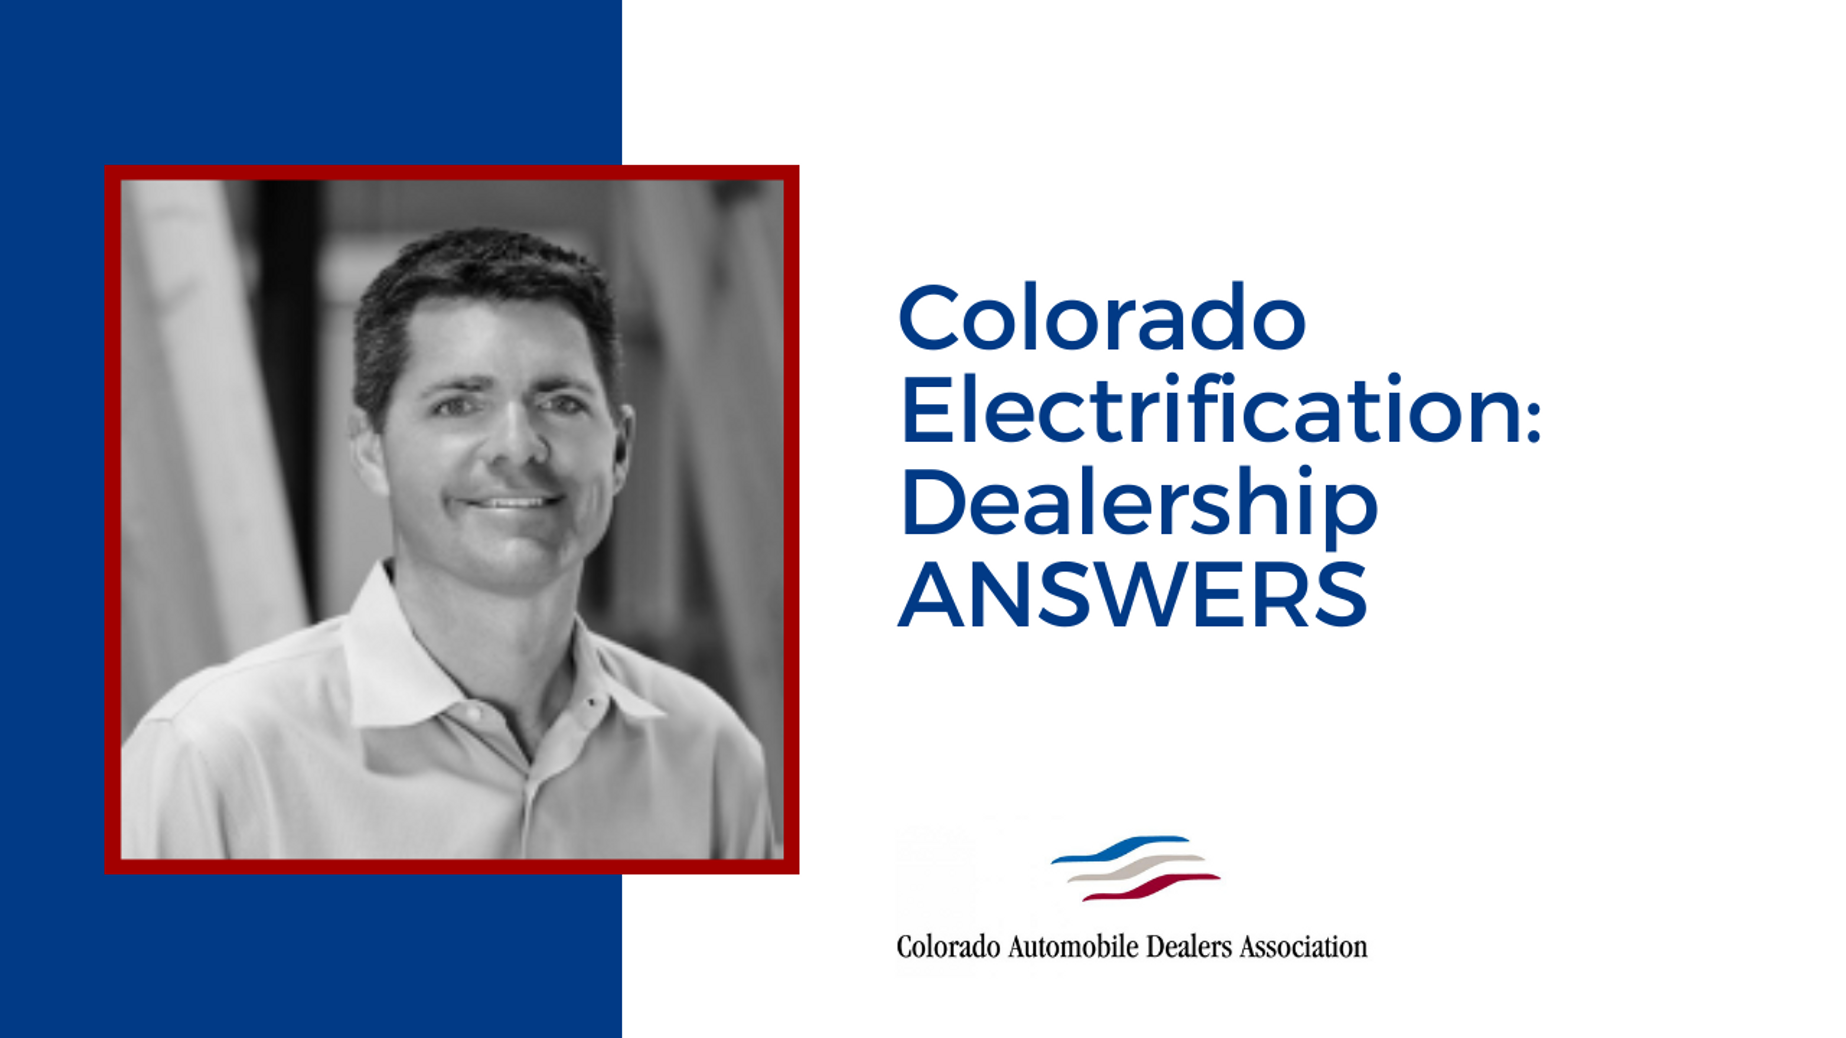 Colorado Electrification: Dealership ANSWERS